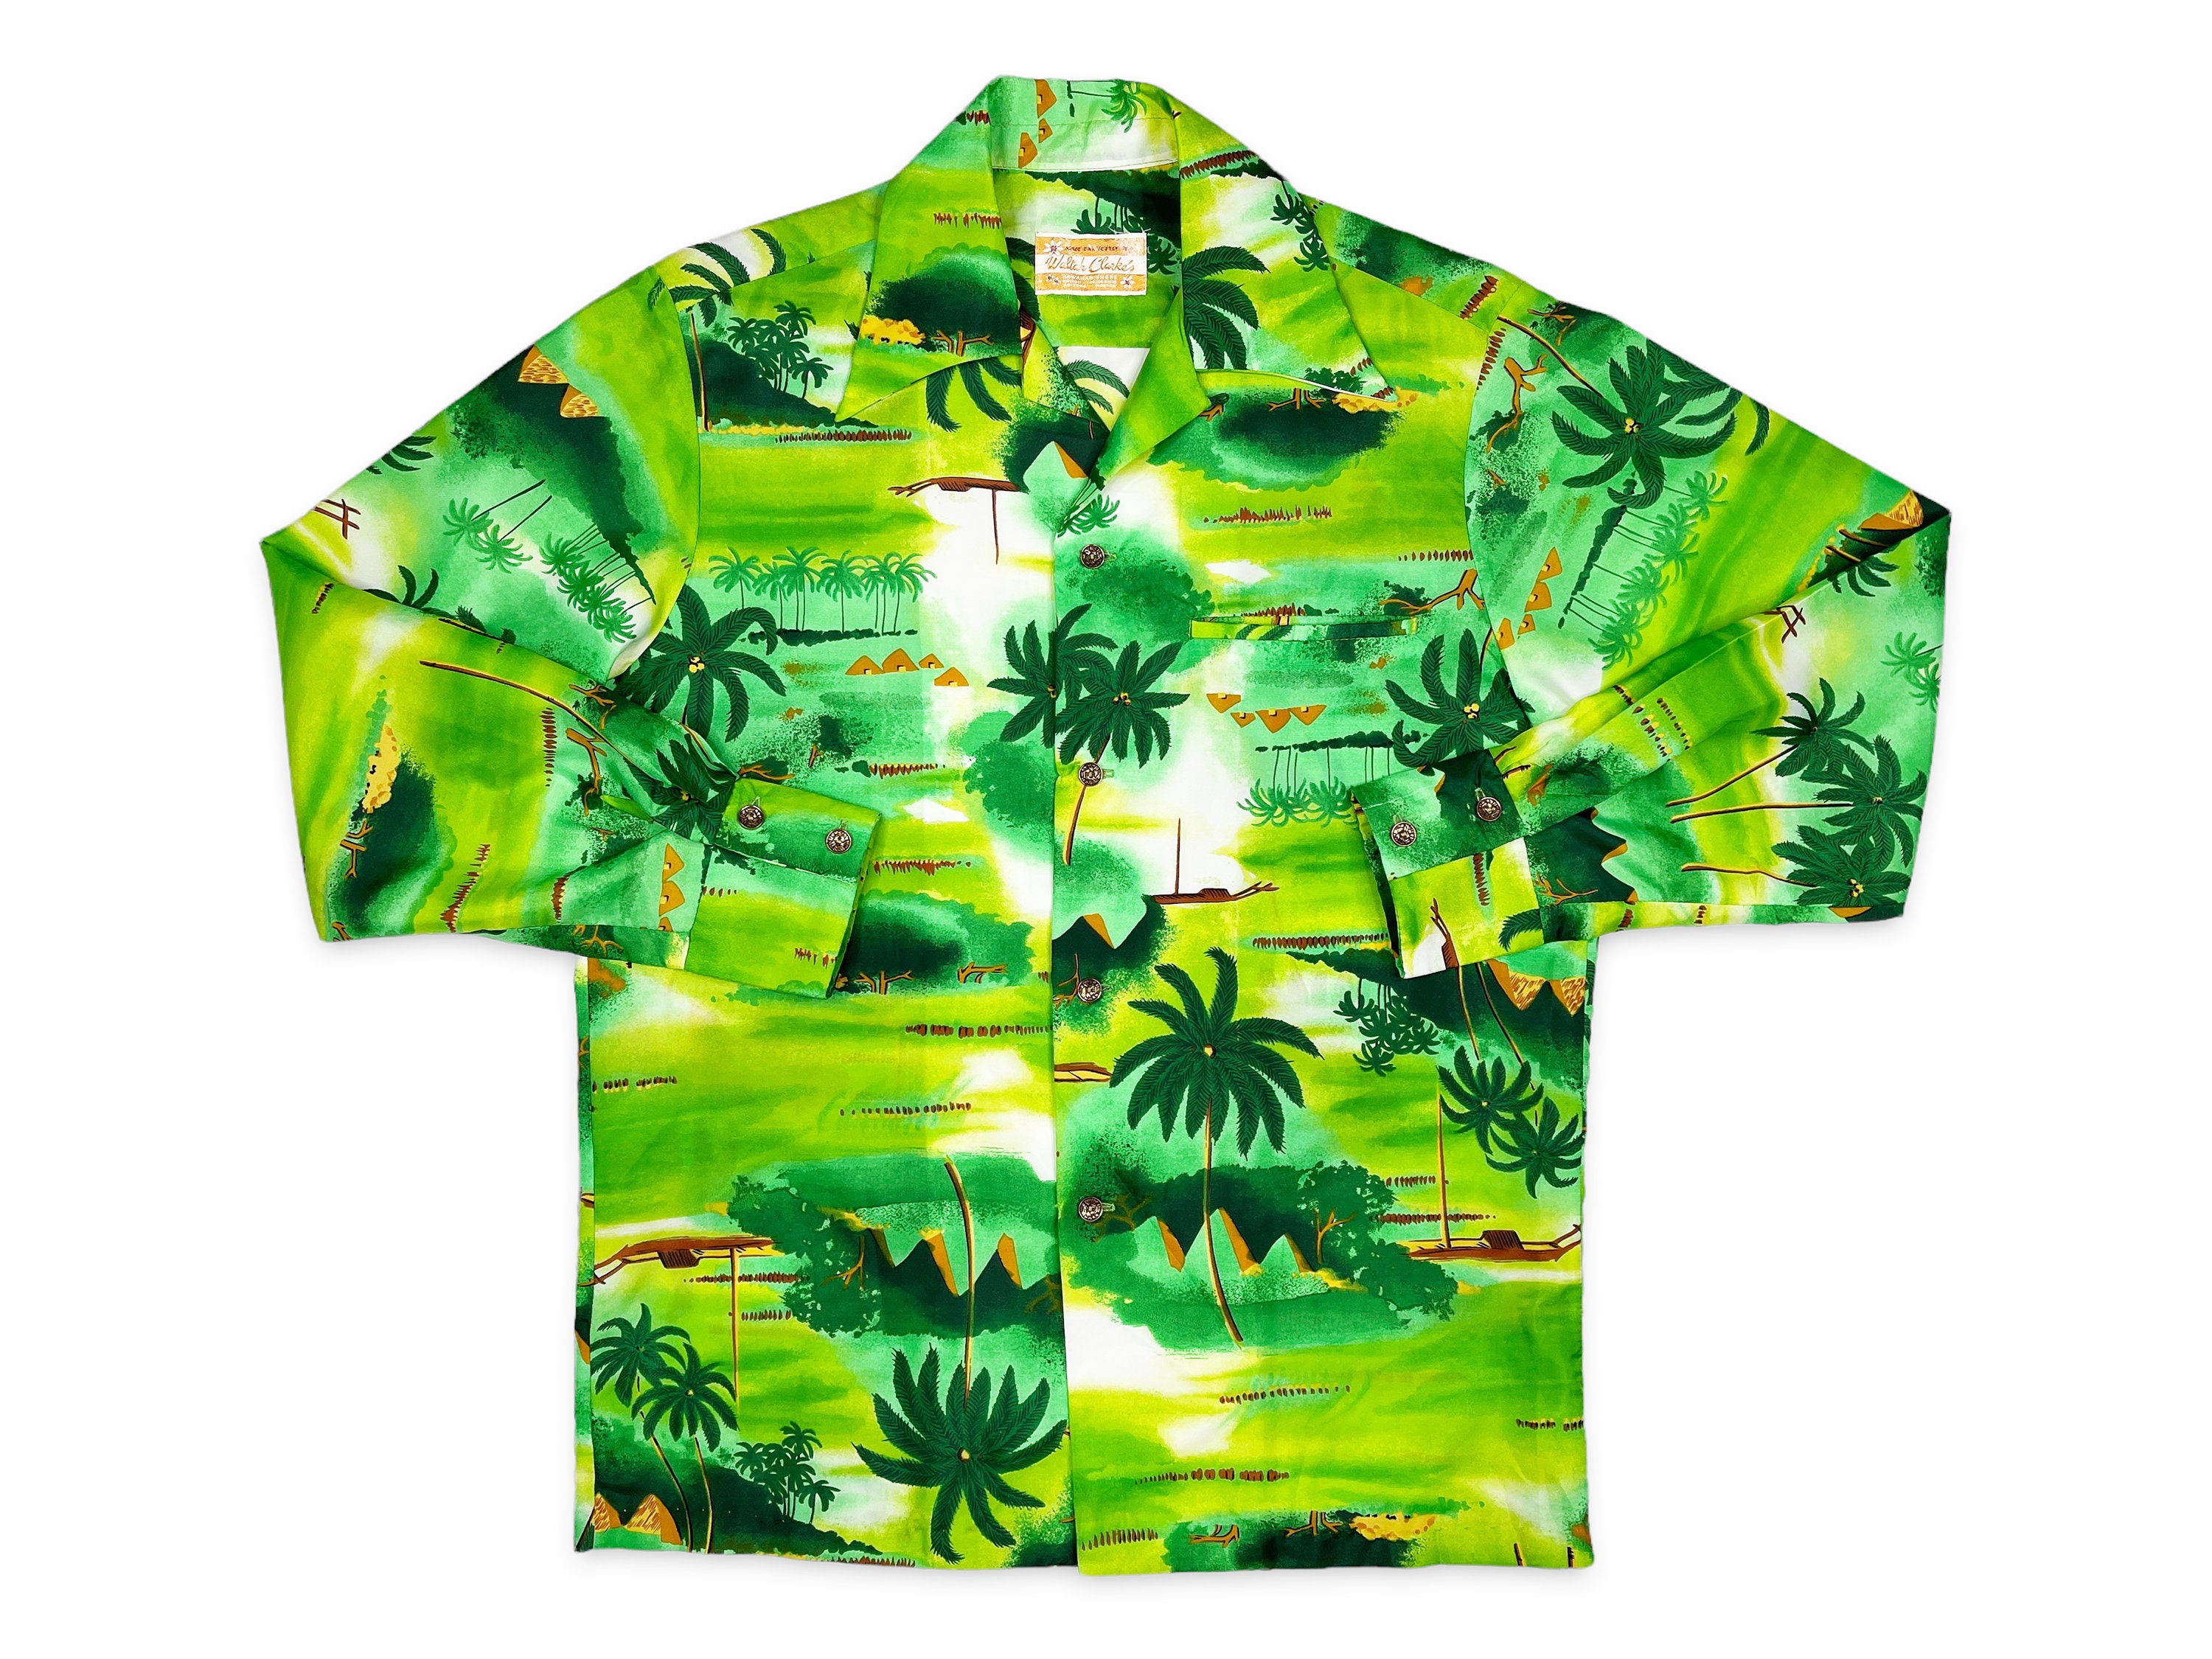 Kleding Herenkleding Overhemden & T-shirts Oxfords & Buttondowns Vintage jaren 1960 psychedelische hippie Hawaiian Waltah Clarkes shirt 